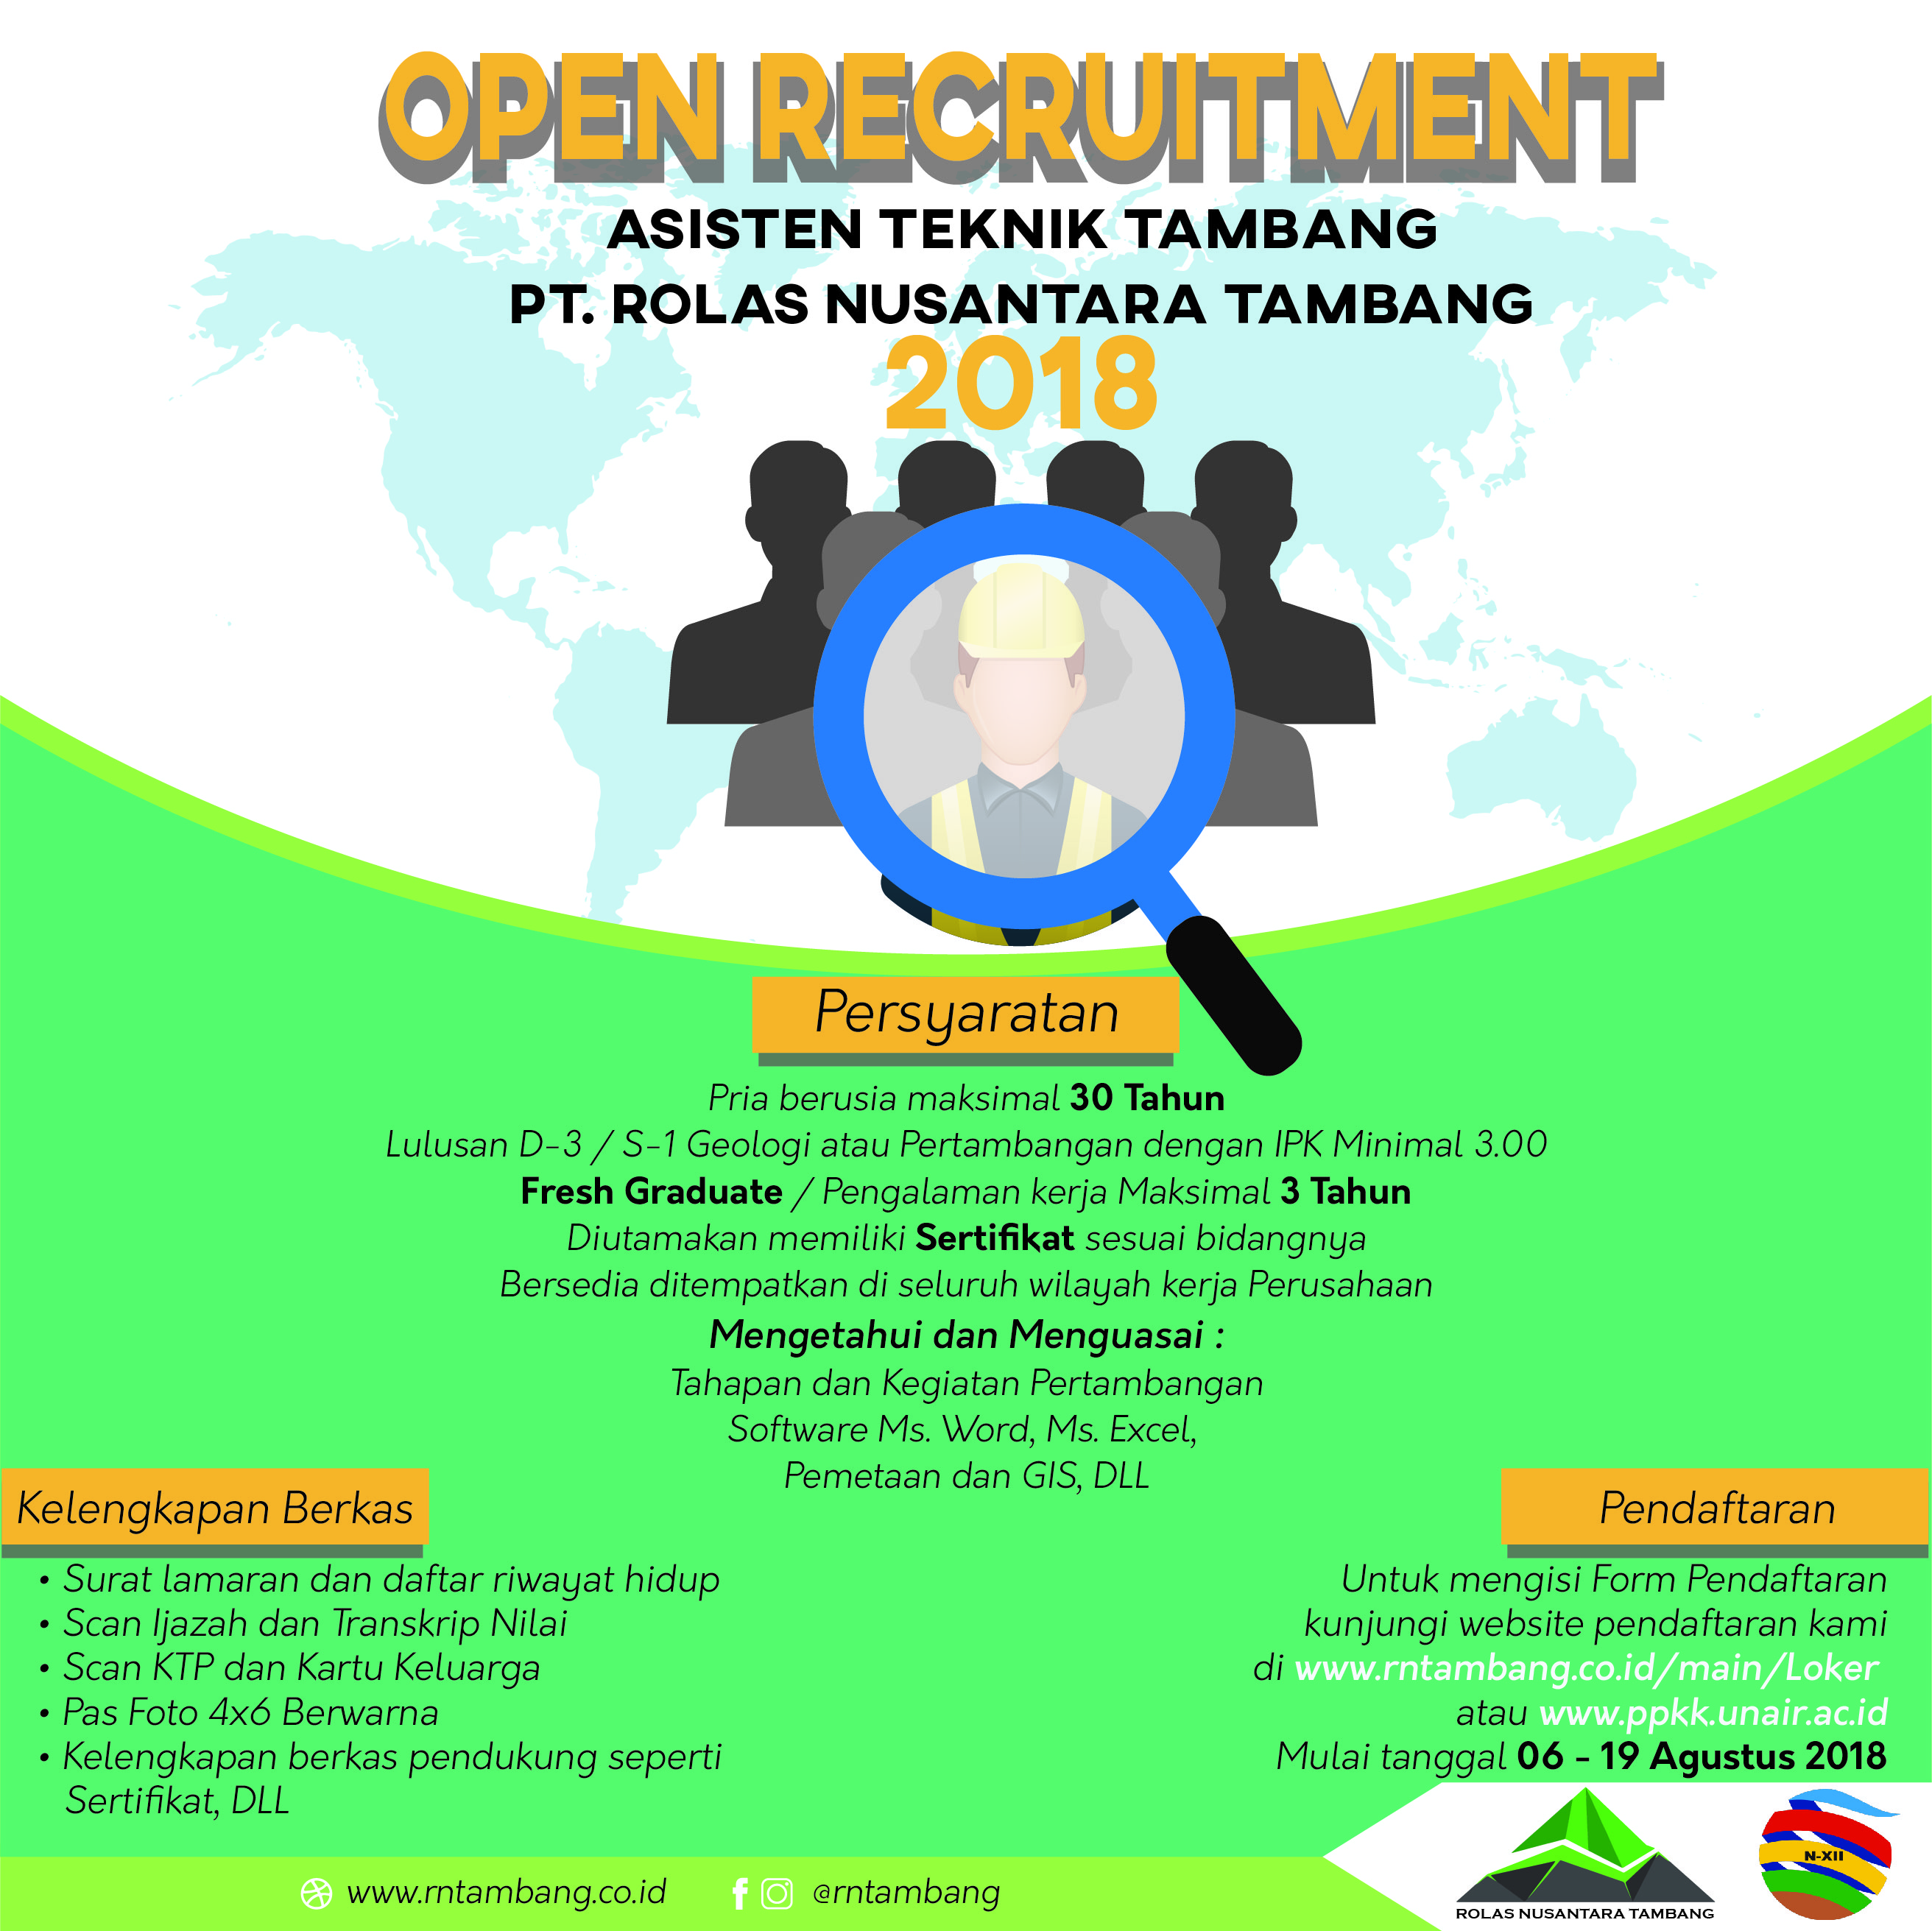 Open Recruitment Asisten Teknik Tambang 2018